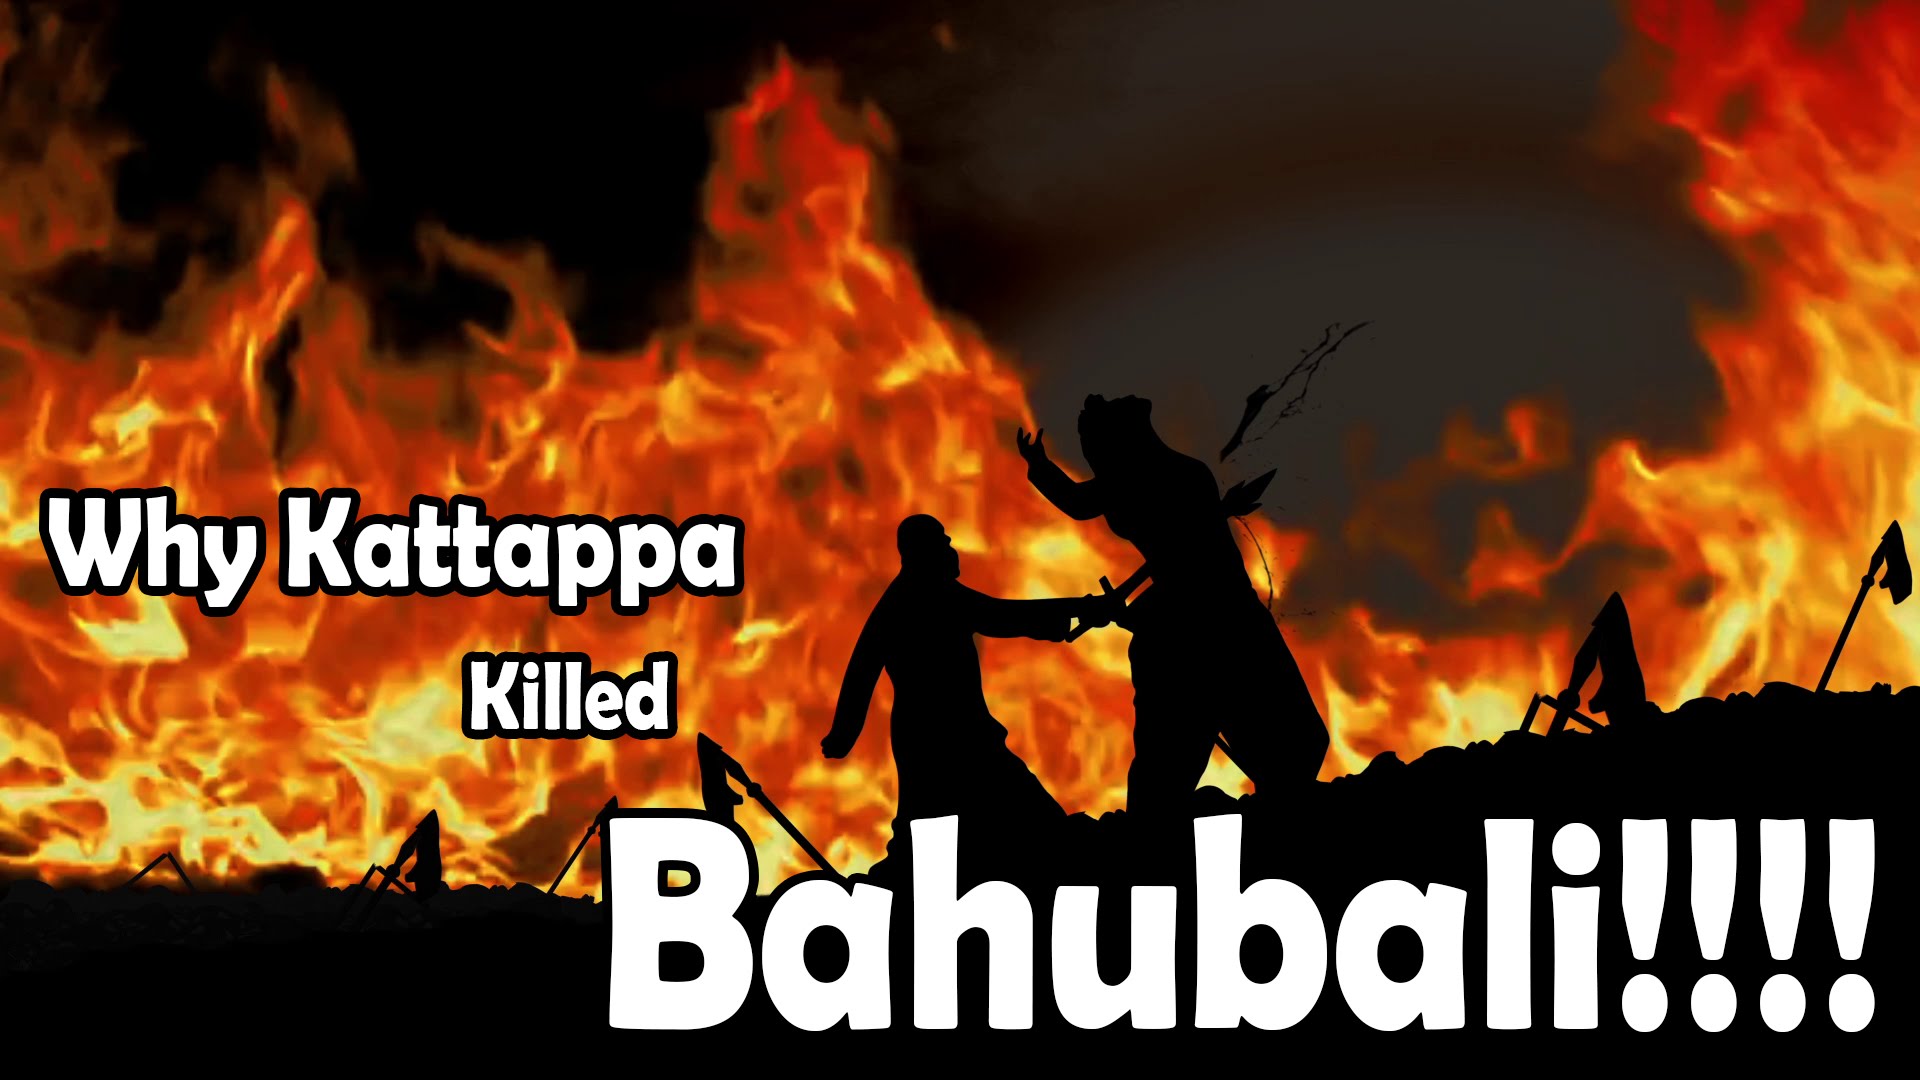 kattappa-killed-baahubali